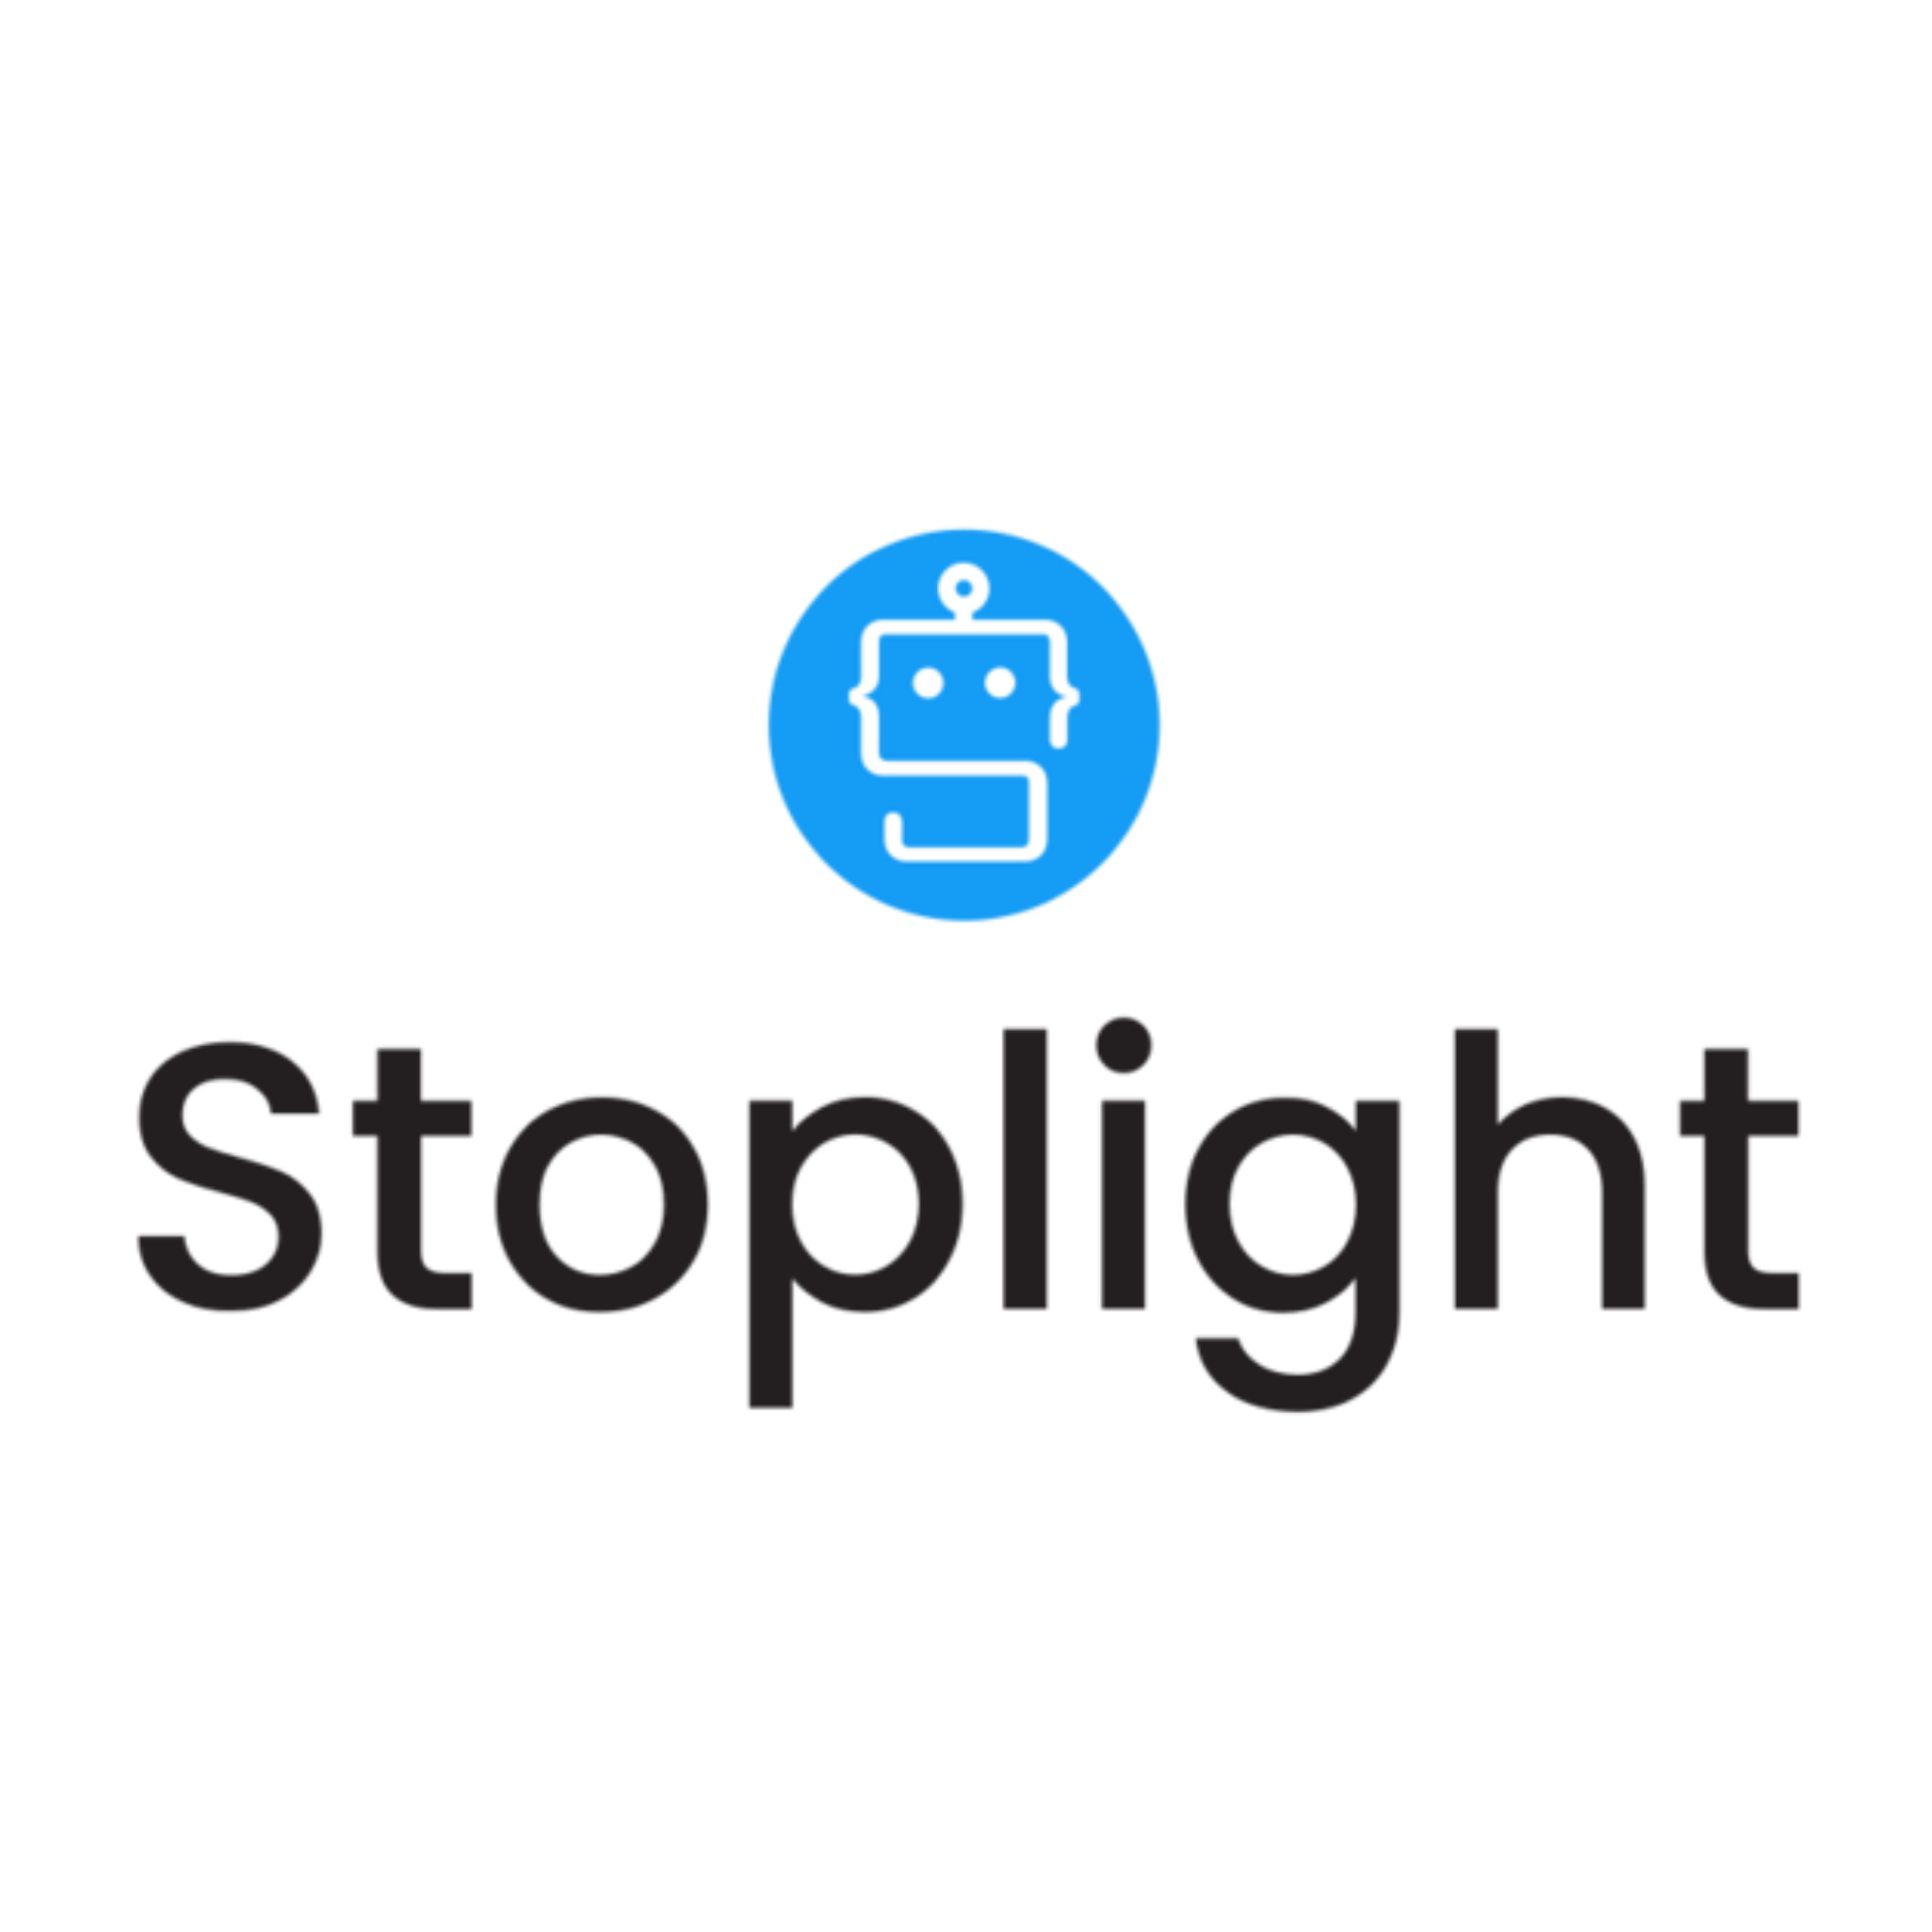 logo - spotlight square